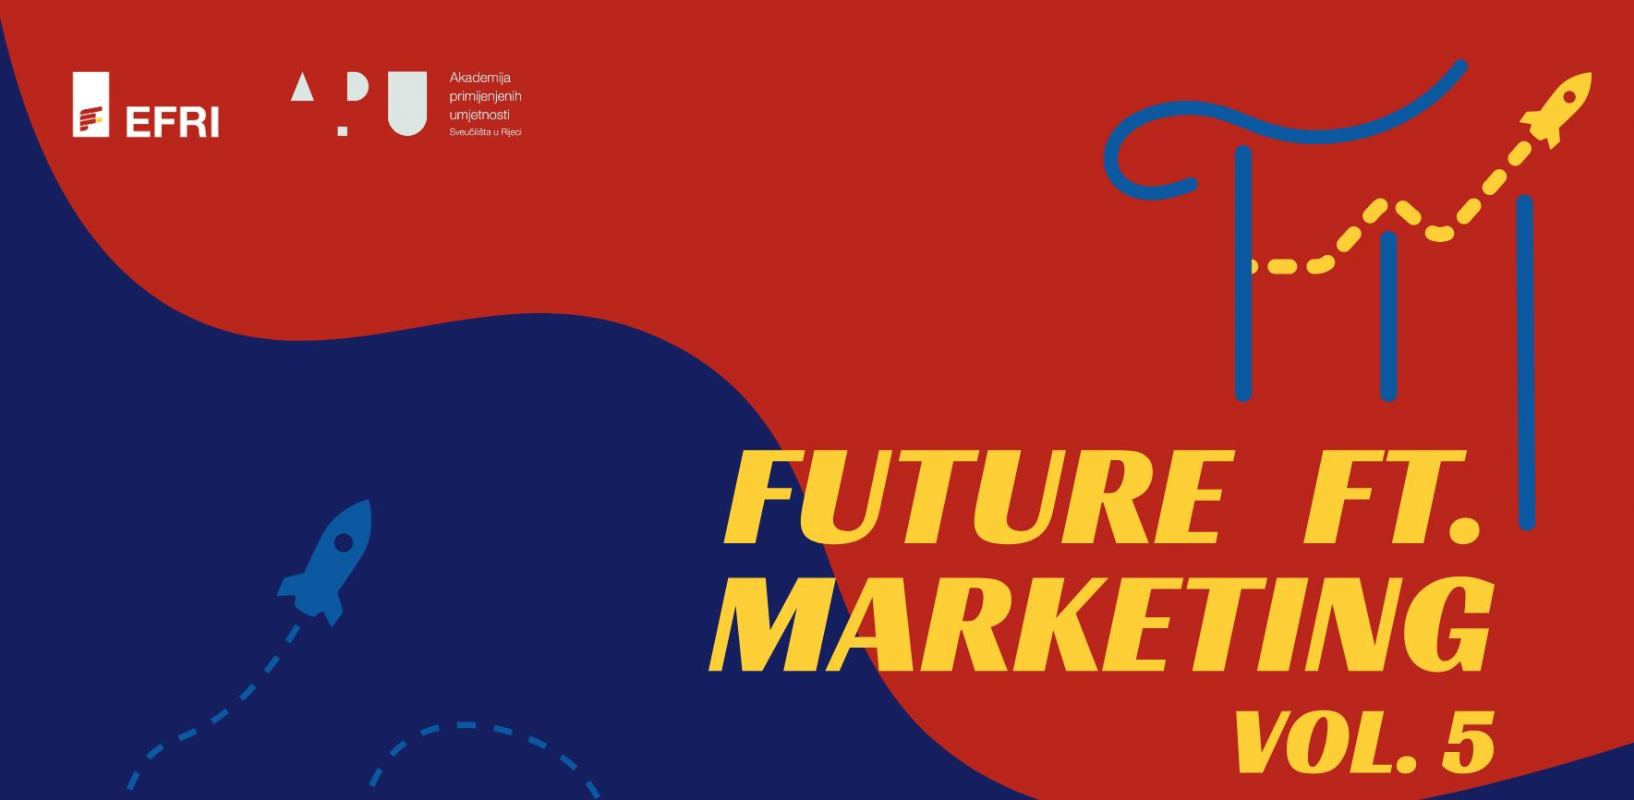 Future ft. Marketing vol. 5